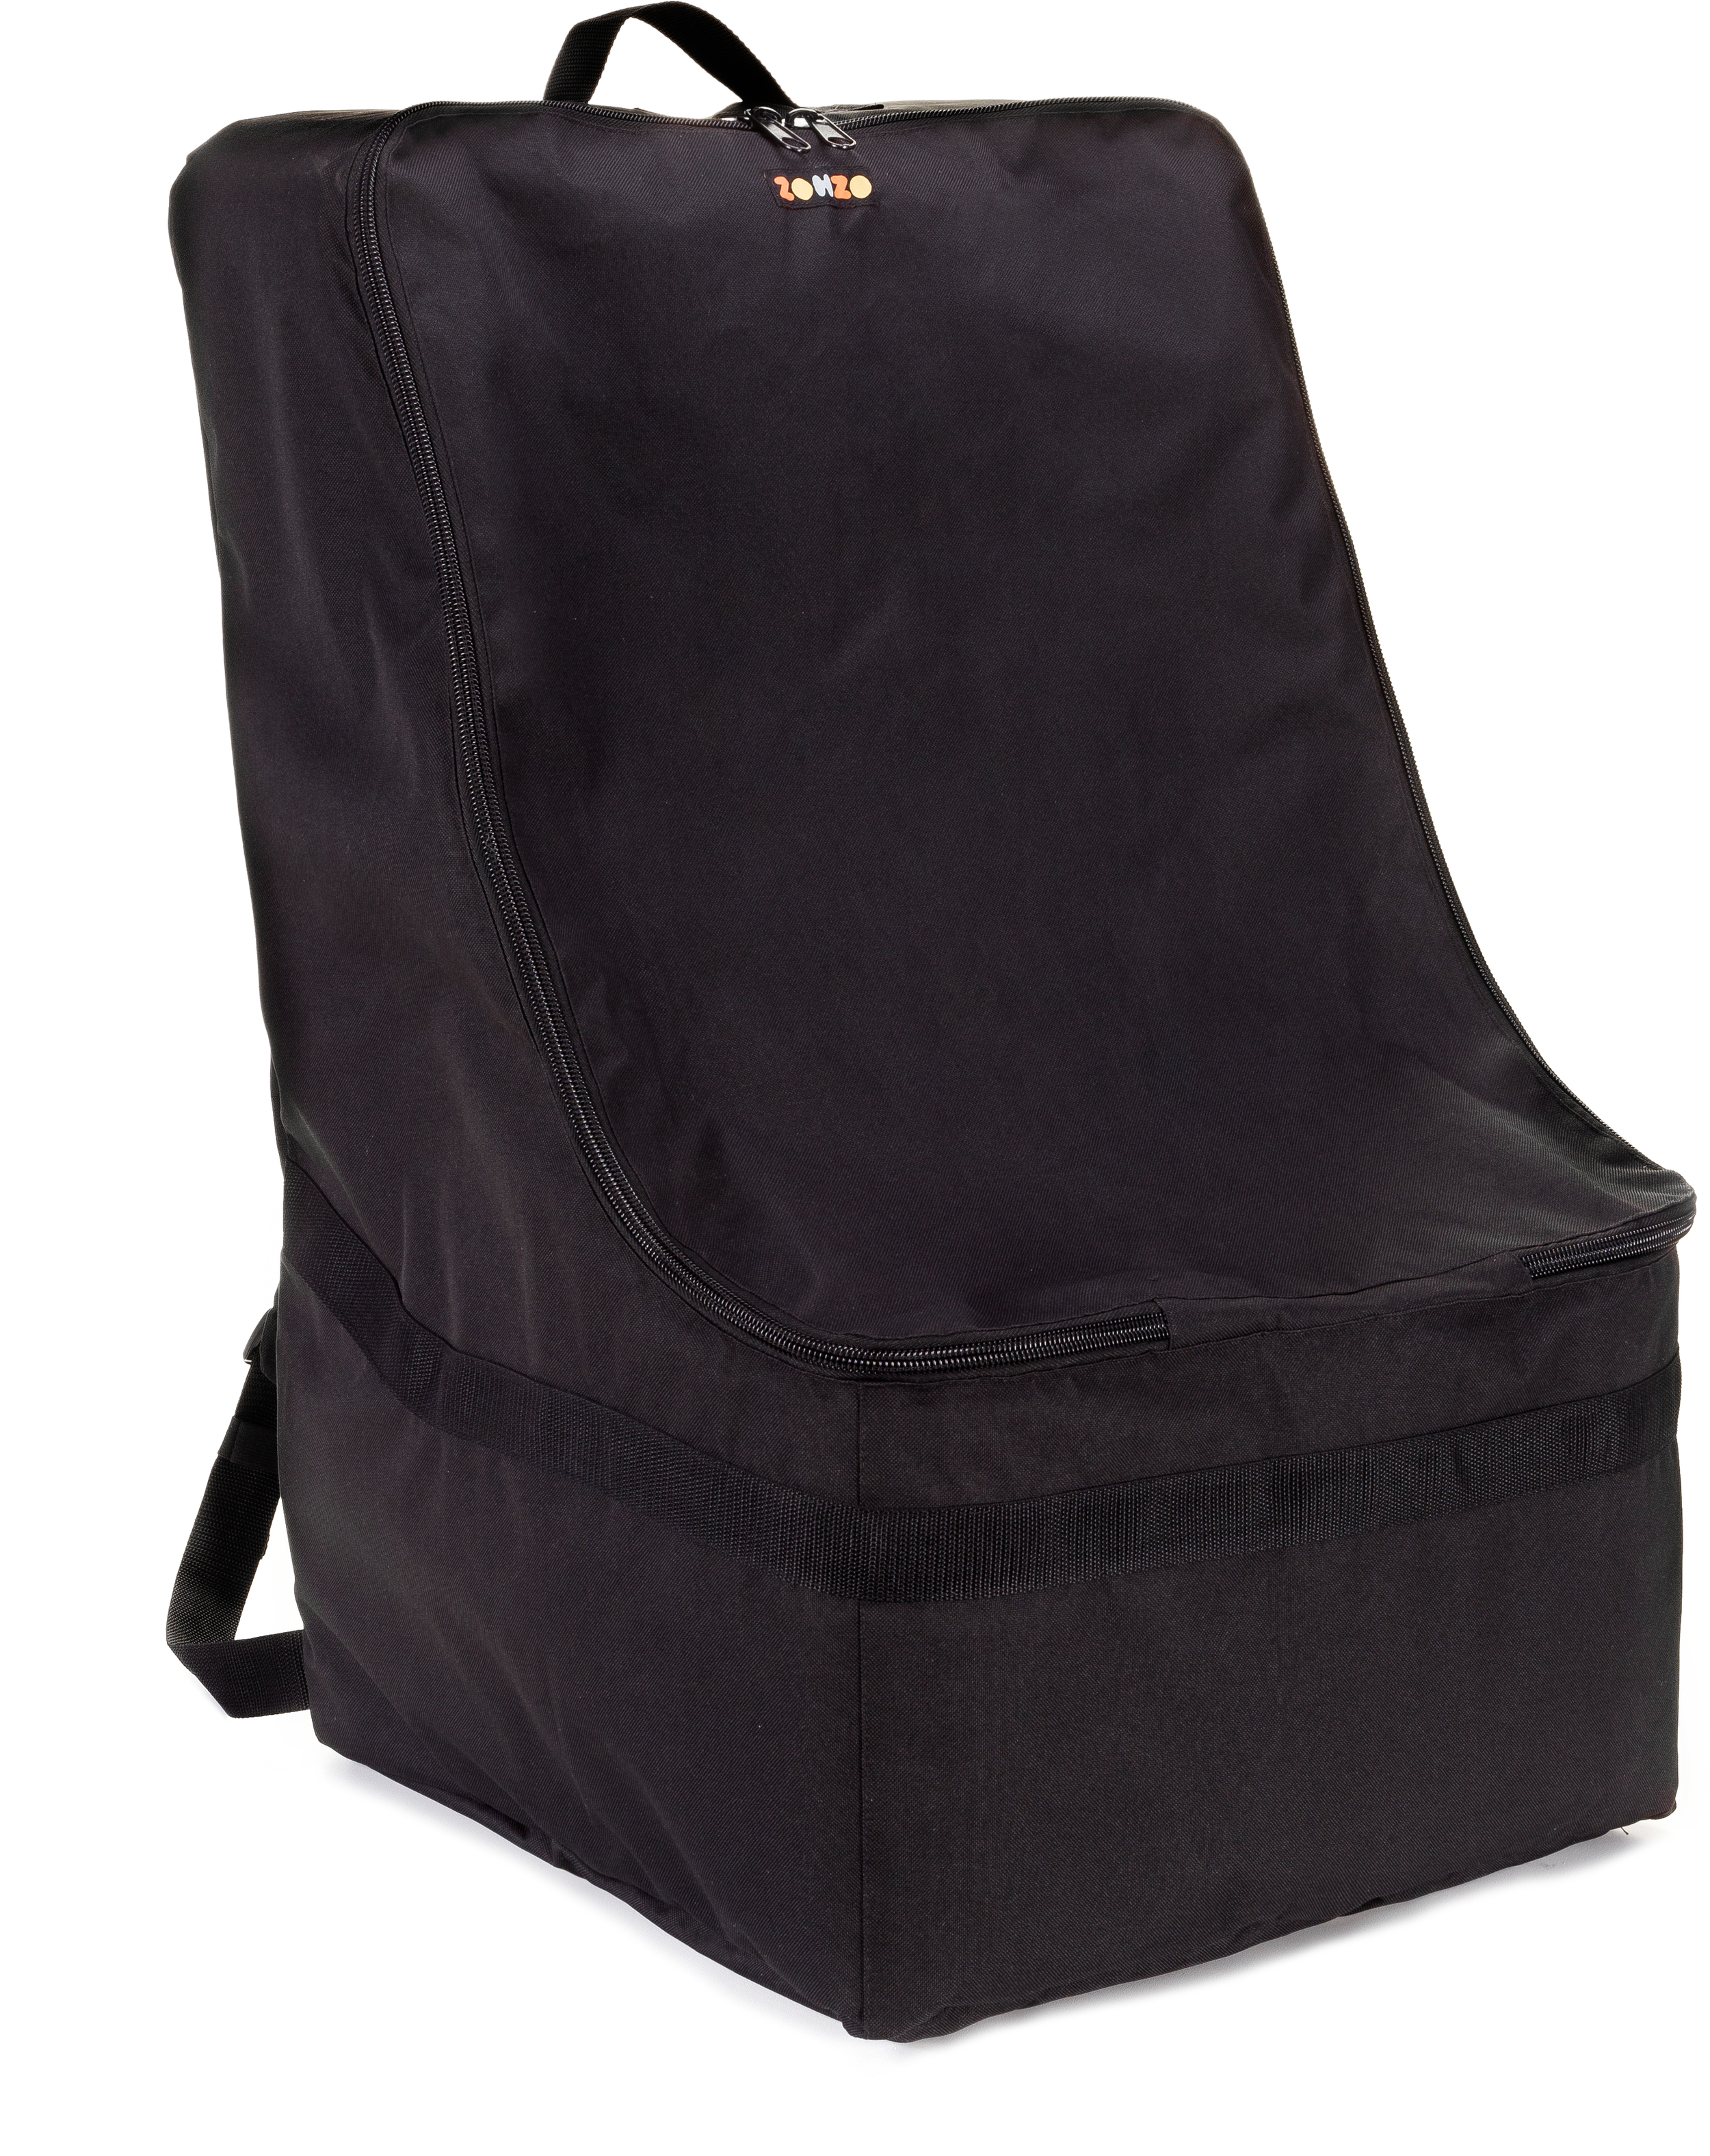 zohzo stroller travel bag